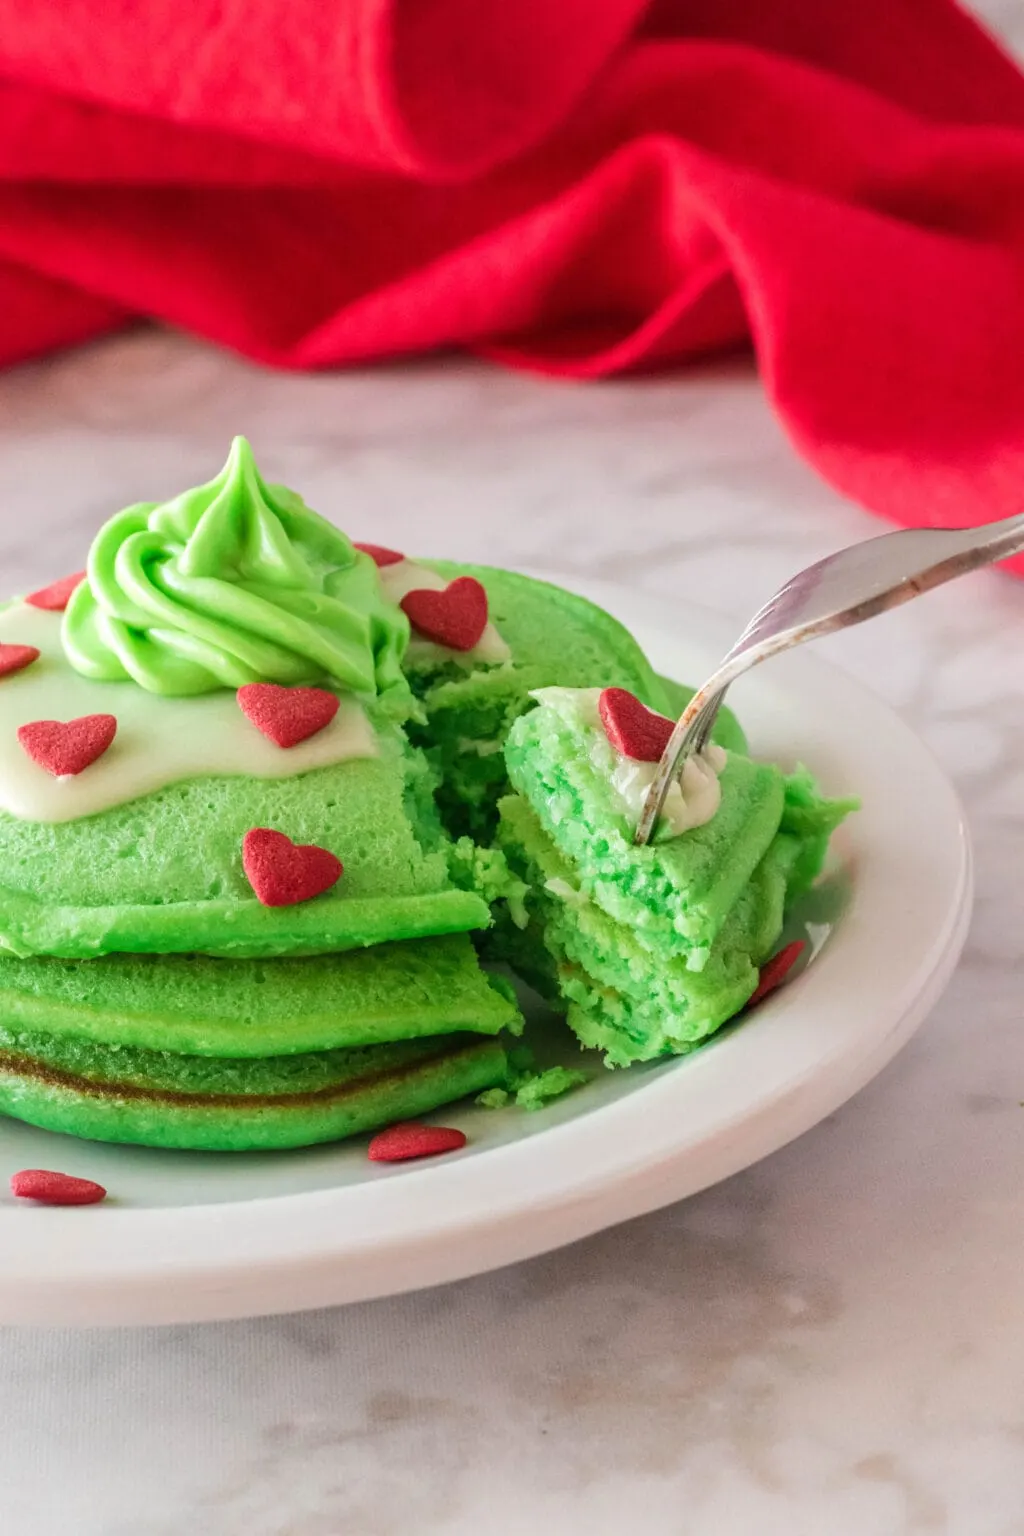 IHOP Grinch's Green Pancakes: STEELING CHRISTMAS! – Snaxtime